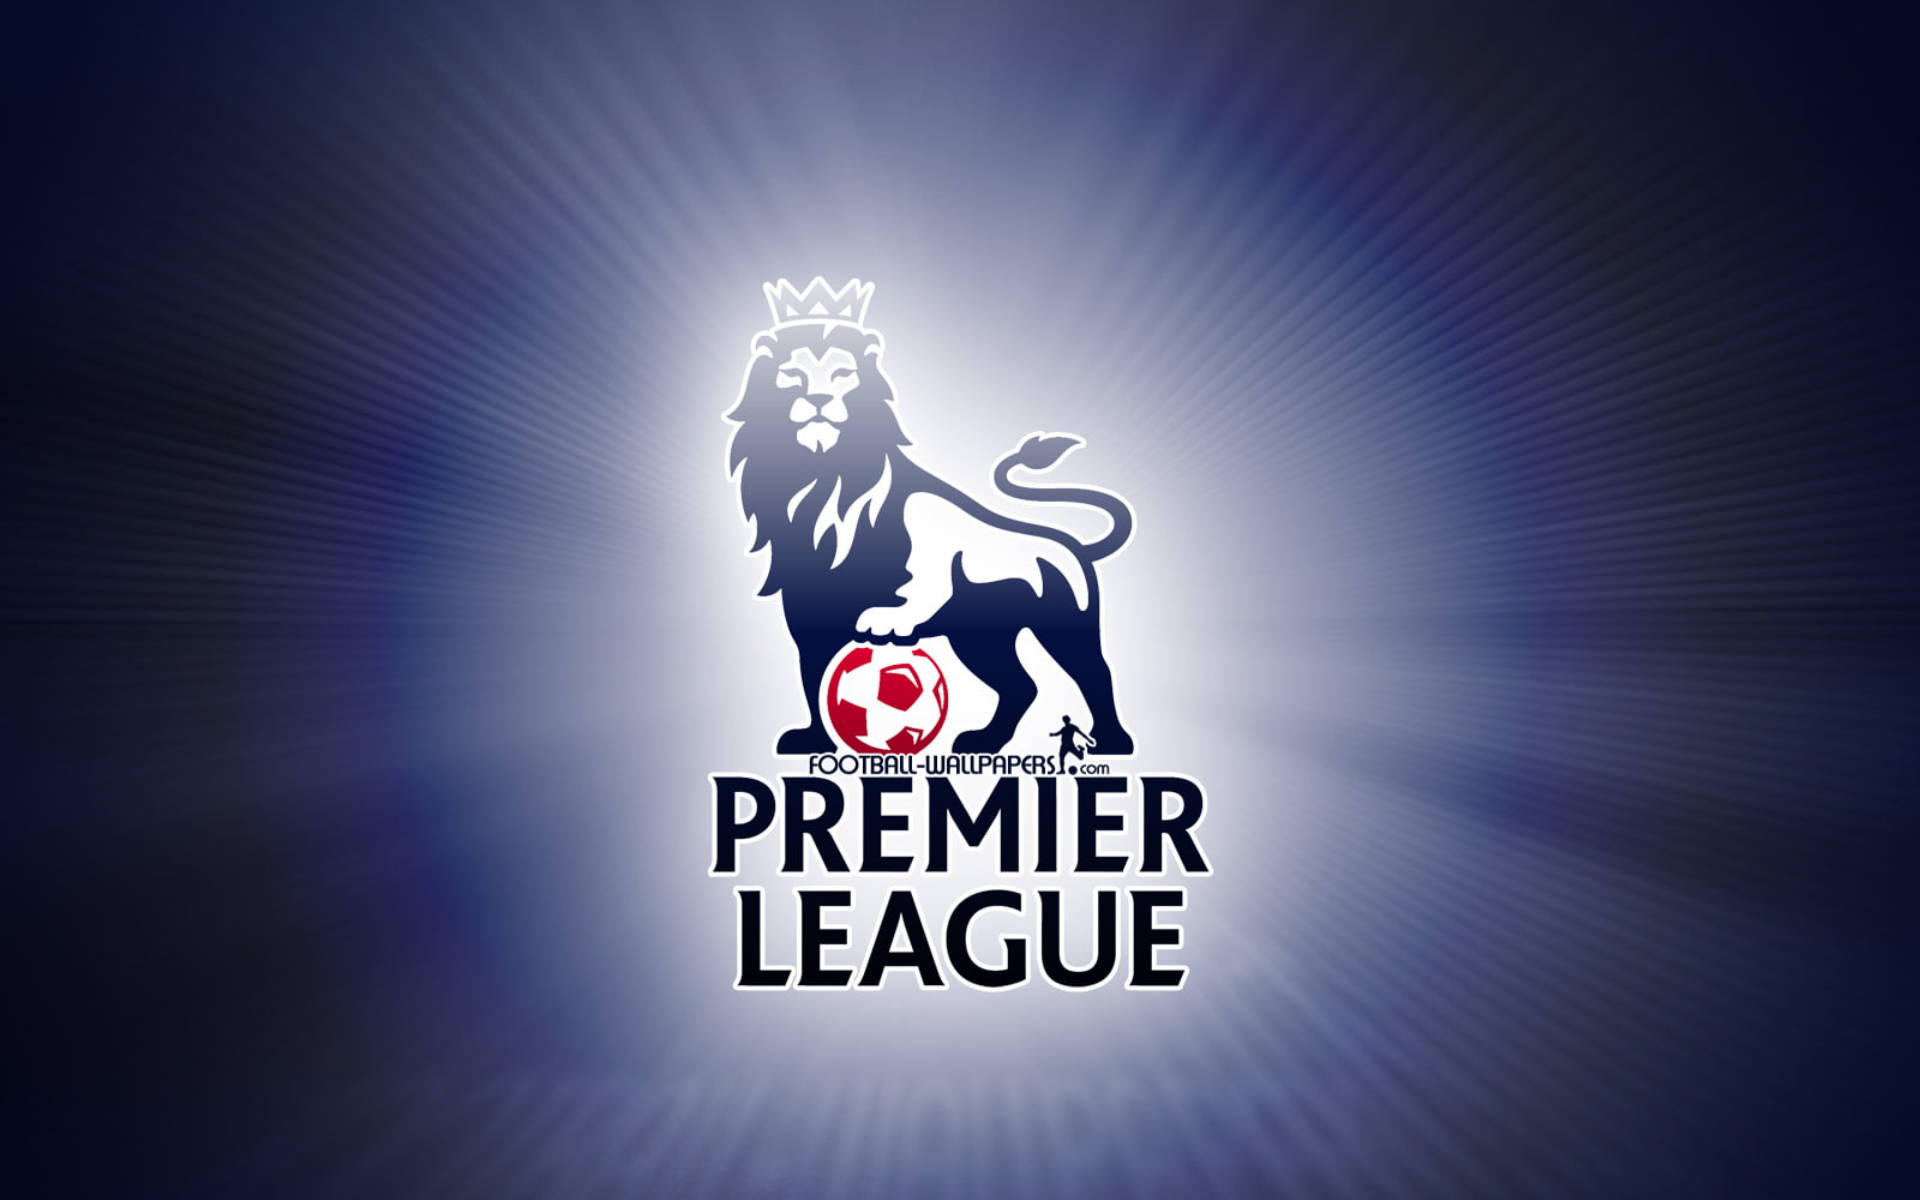 Premier League-logo Mod Lys Wallpaper